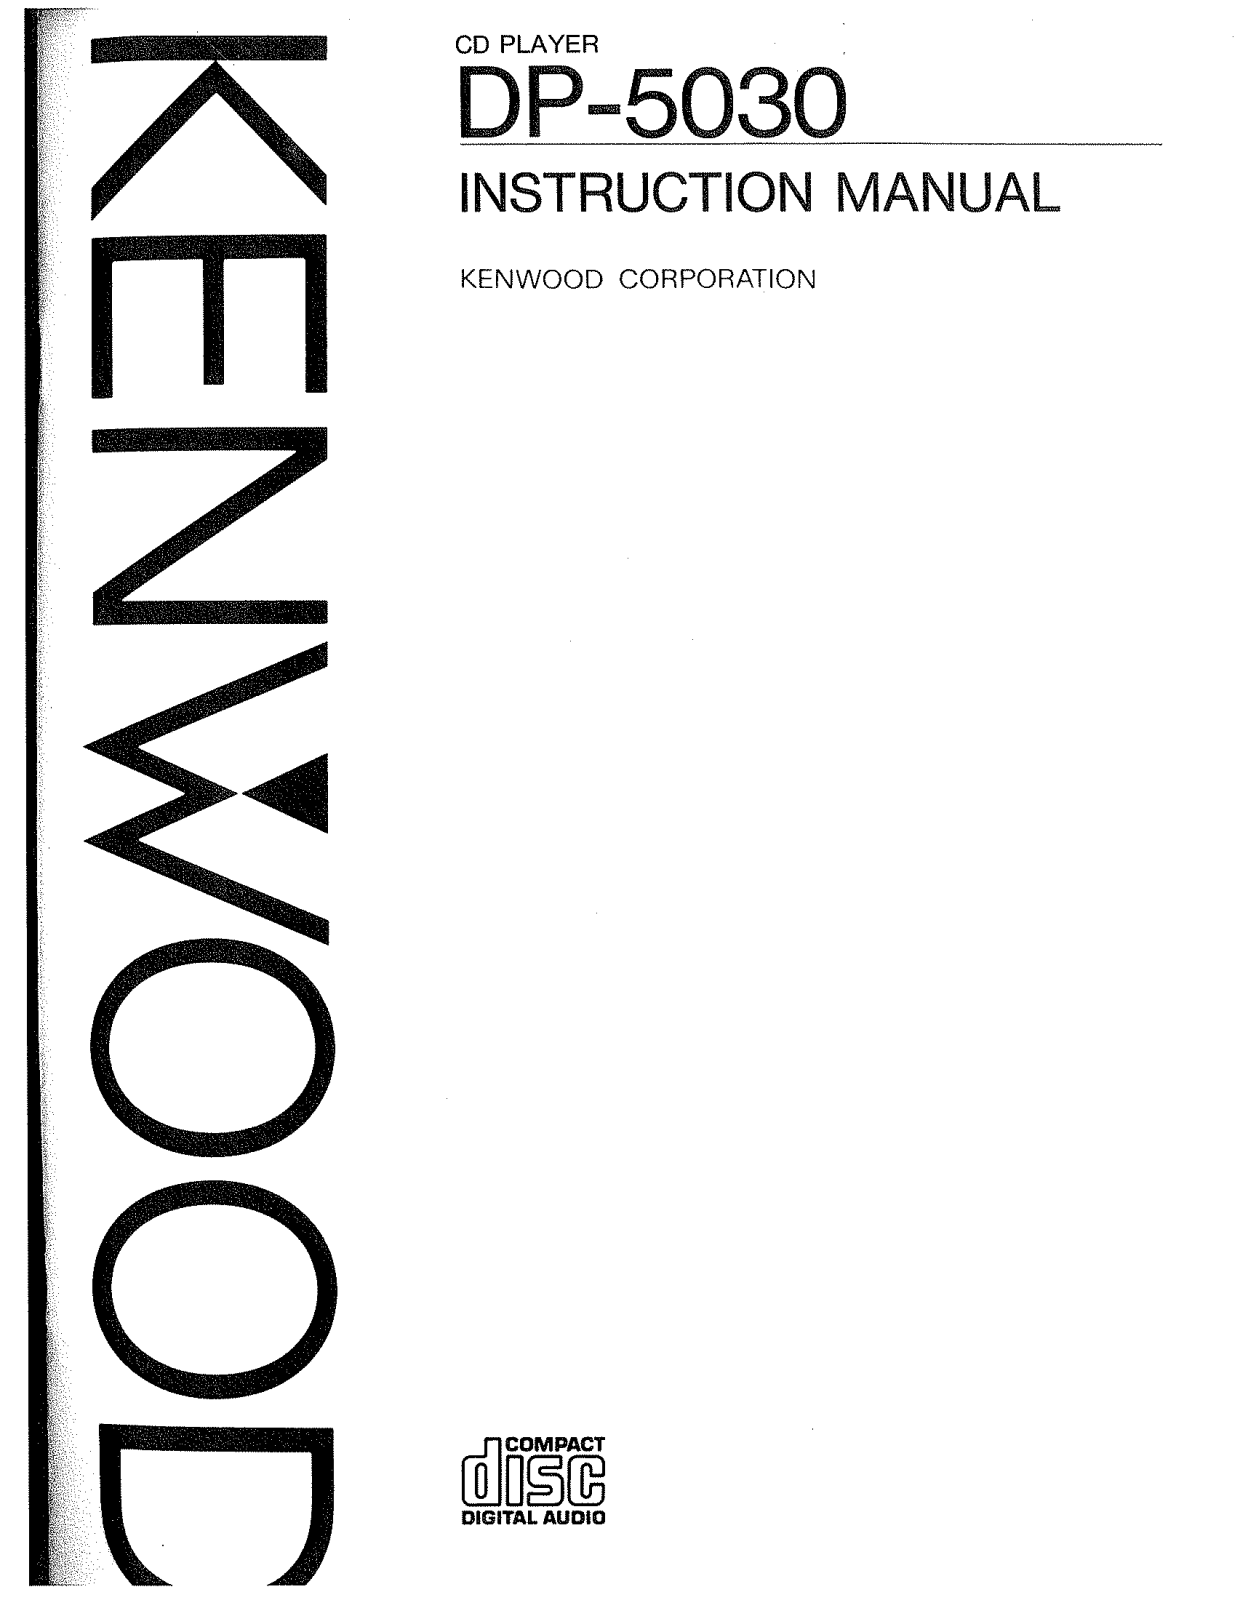 Kenwood DP-5030 Owner's Manual